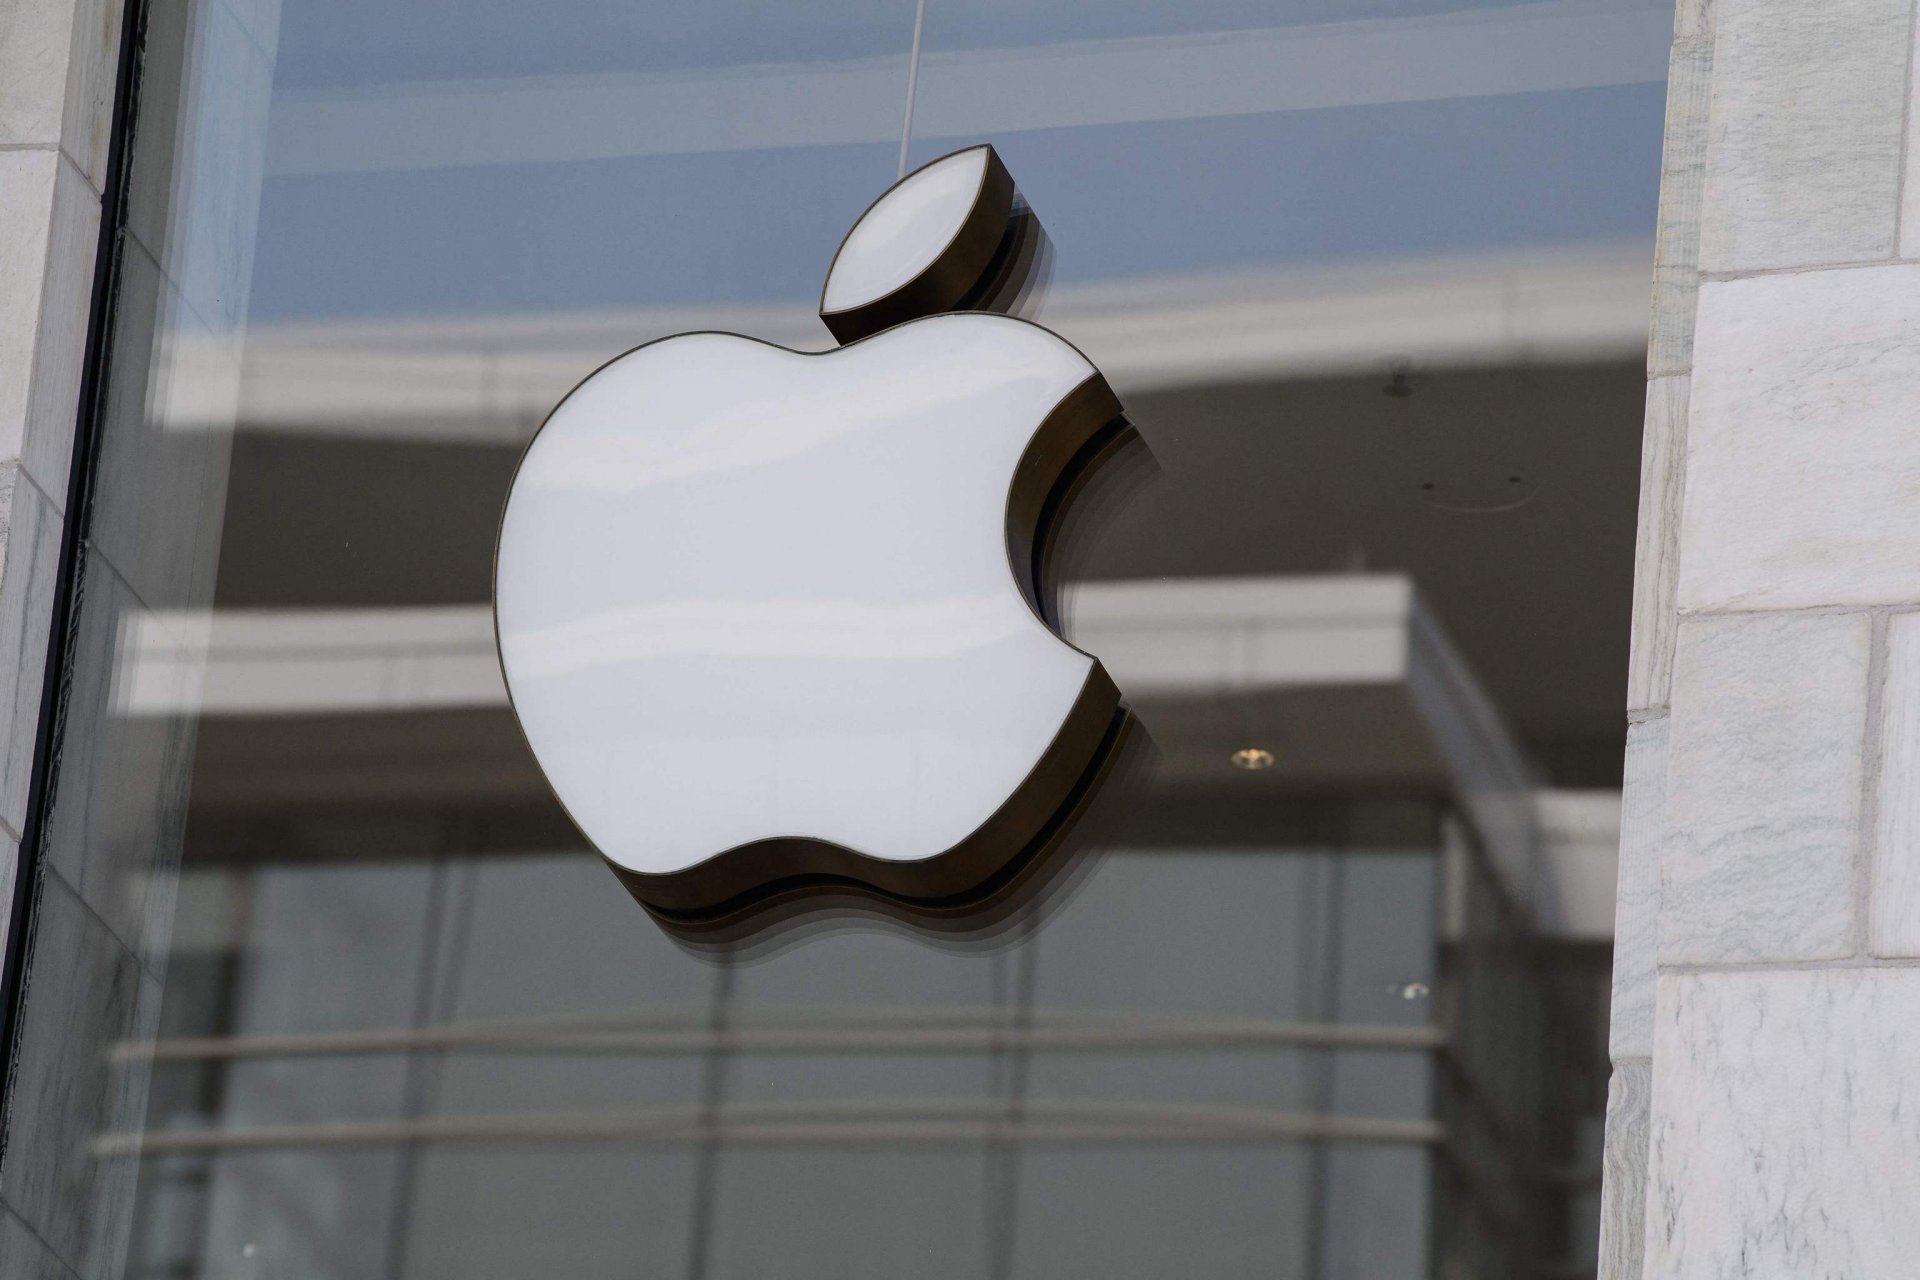 Apple planea lanzar un "revolucionario" iPhone